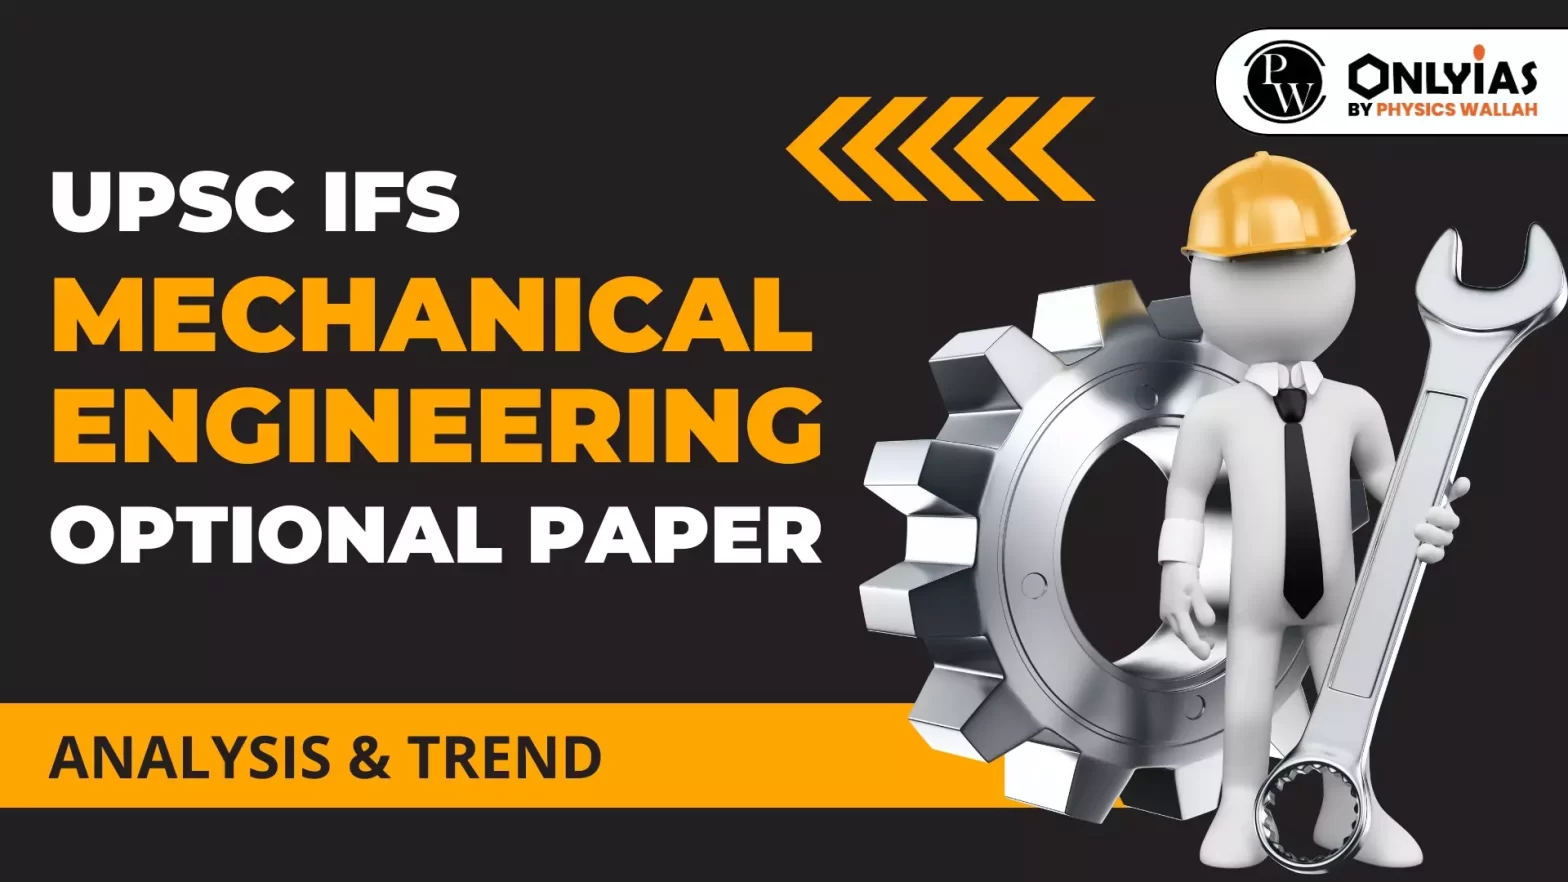 UPSC IFS Mechanical Engineering Optional Paper: Analysis & Trend